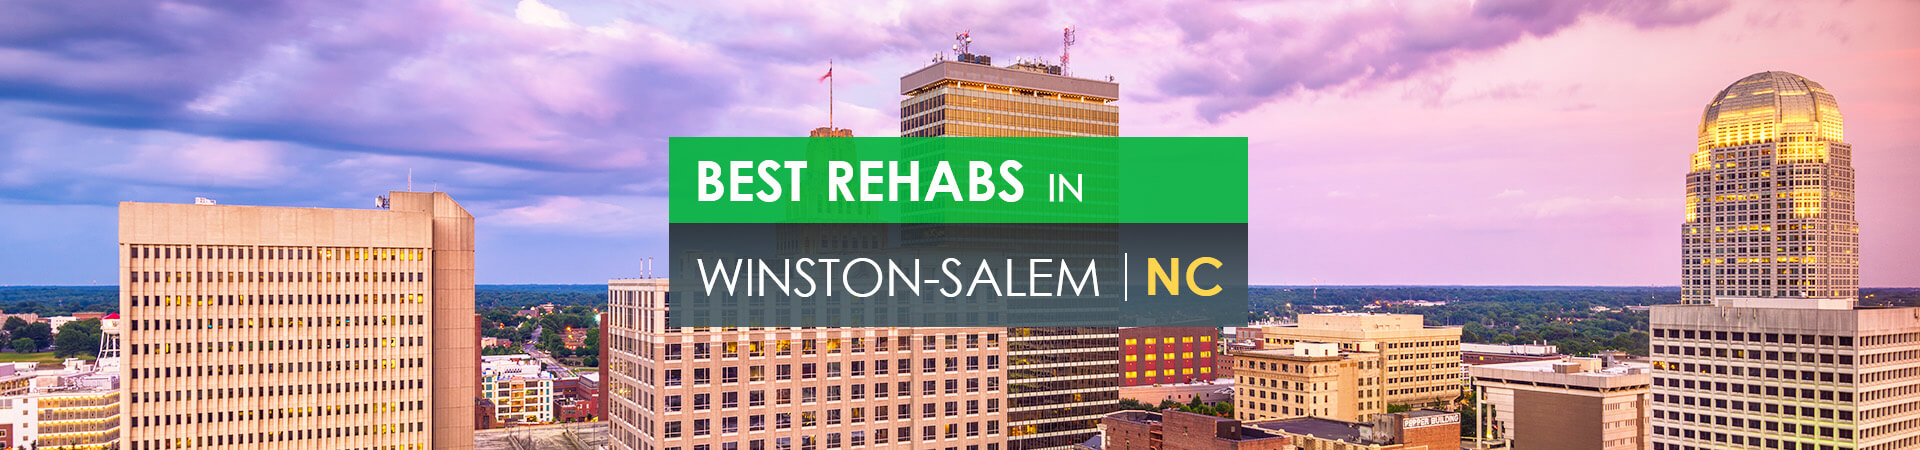 Best rehabs in Winston-Salem, NC